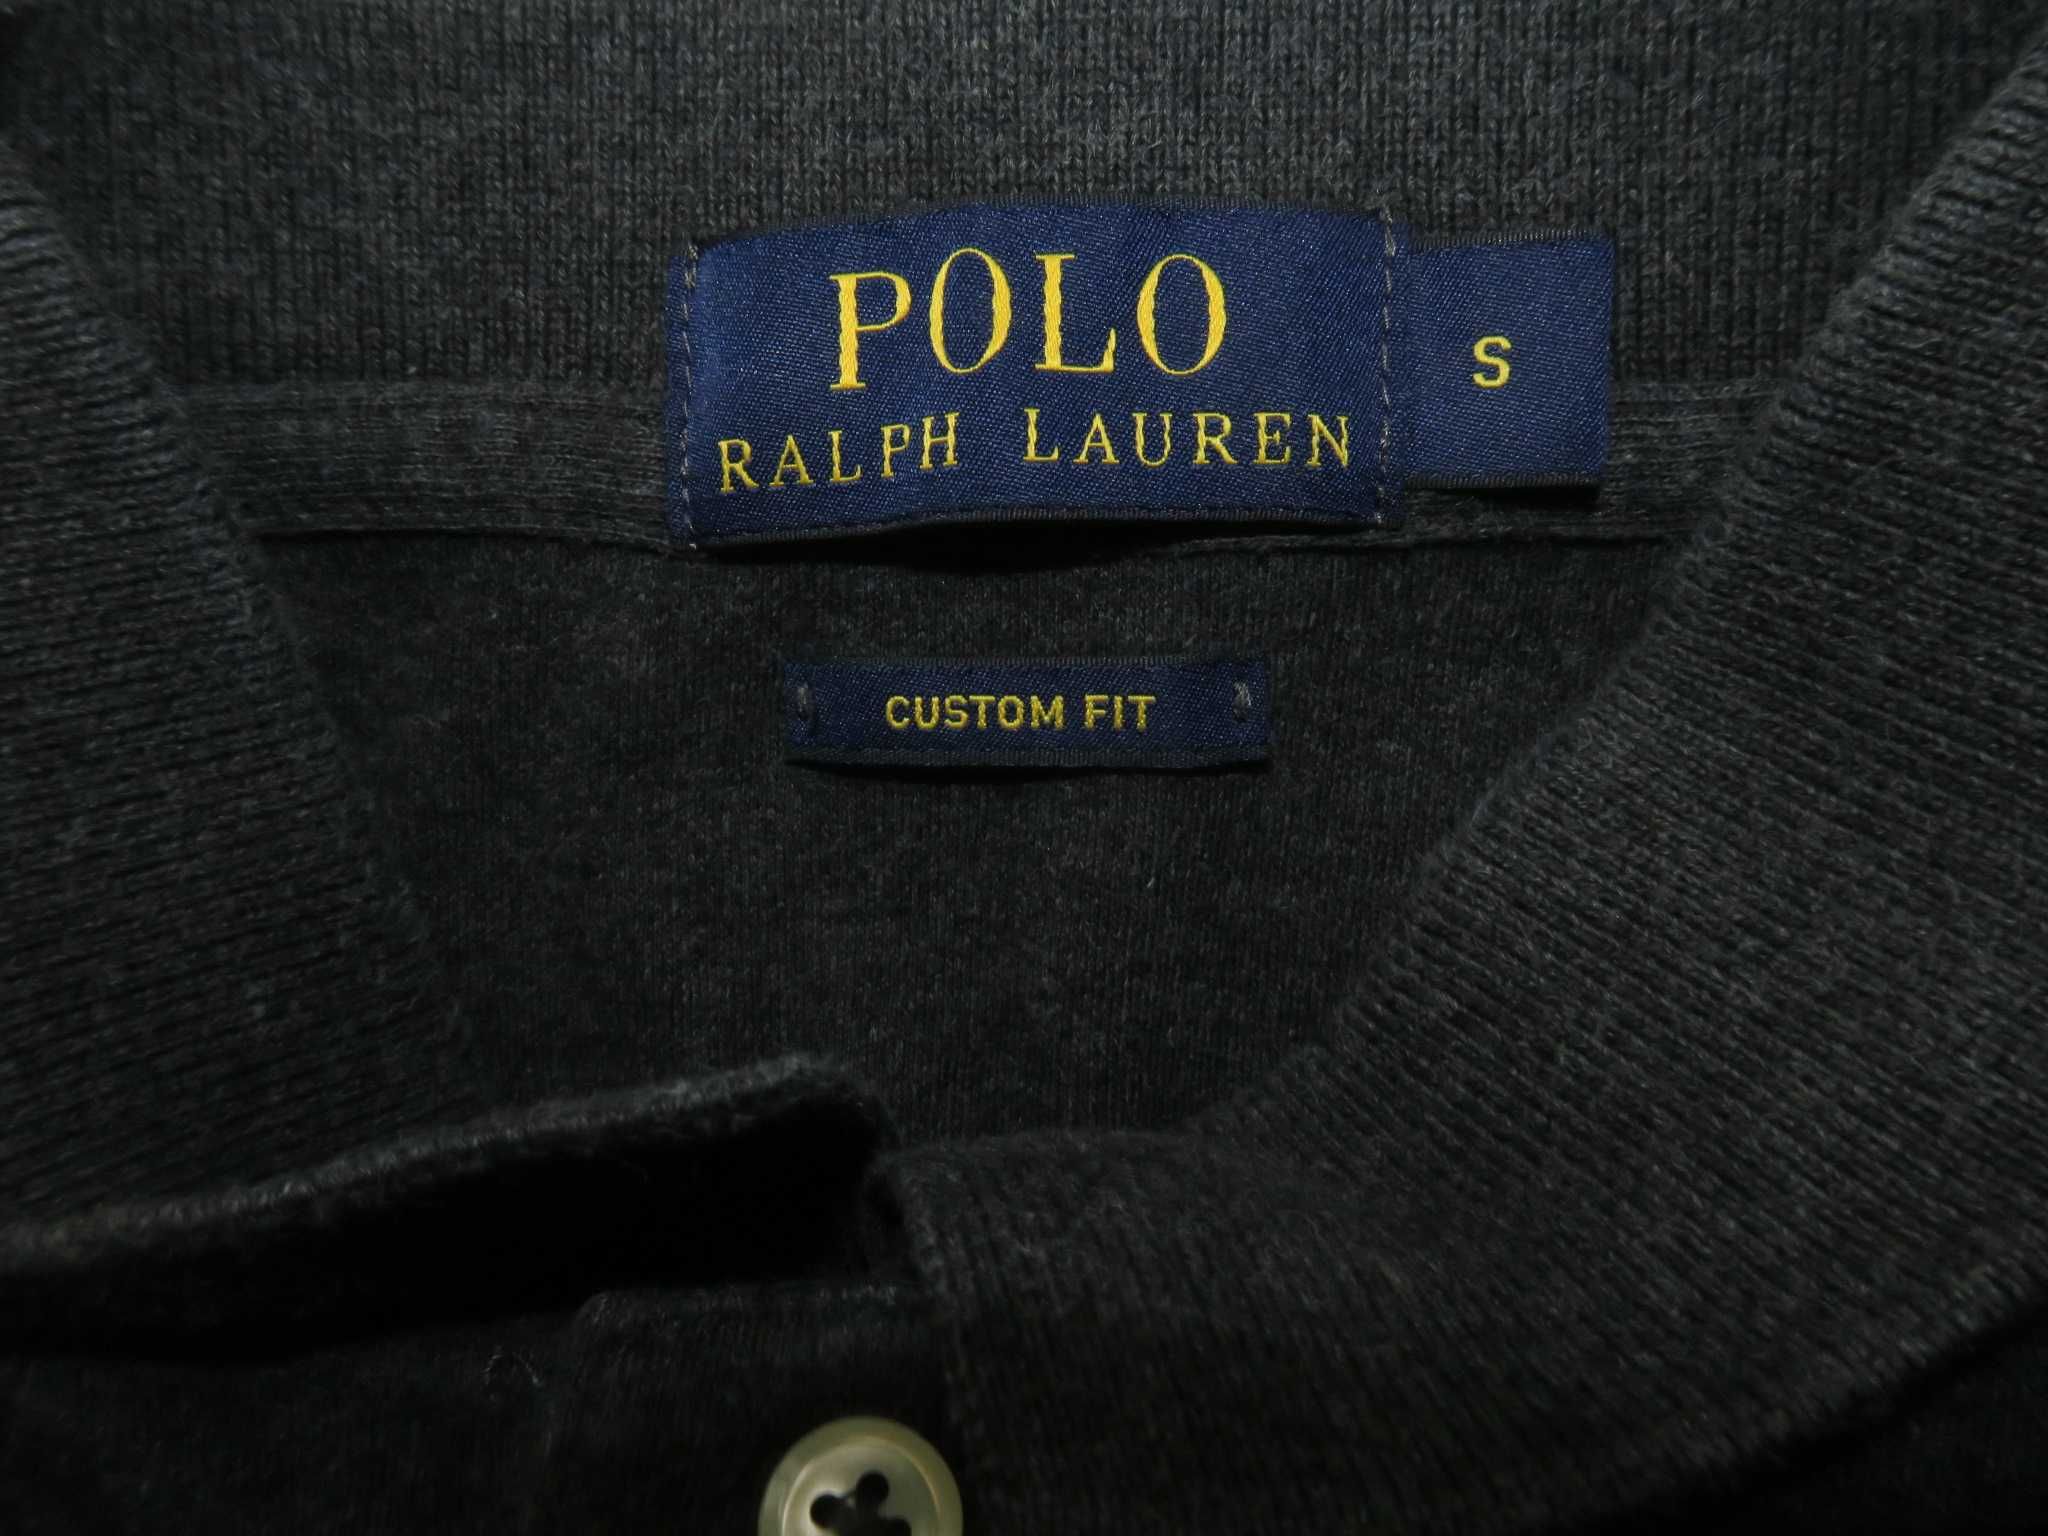 Ralph Lauren koszulka polo polówka nowsze kolekcje S